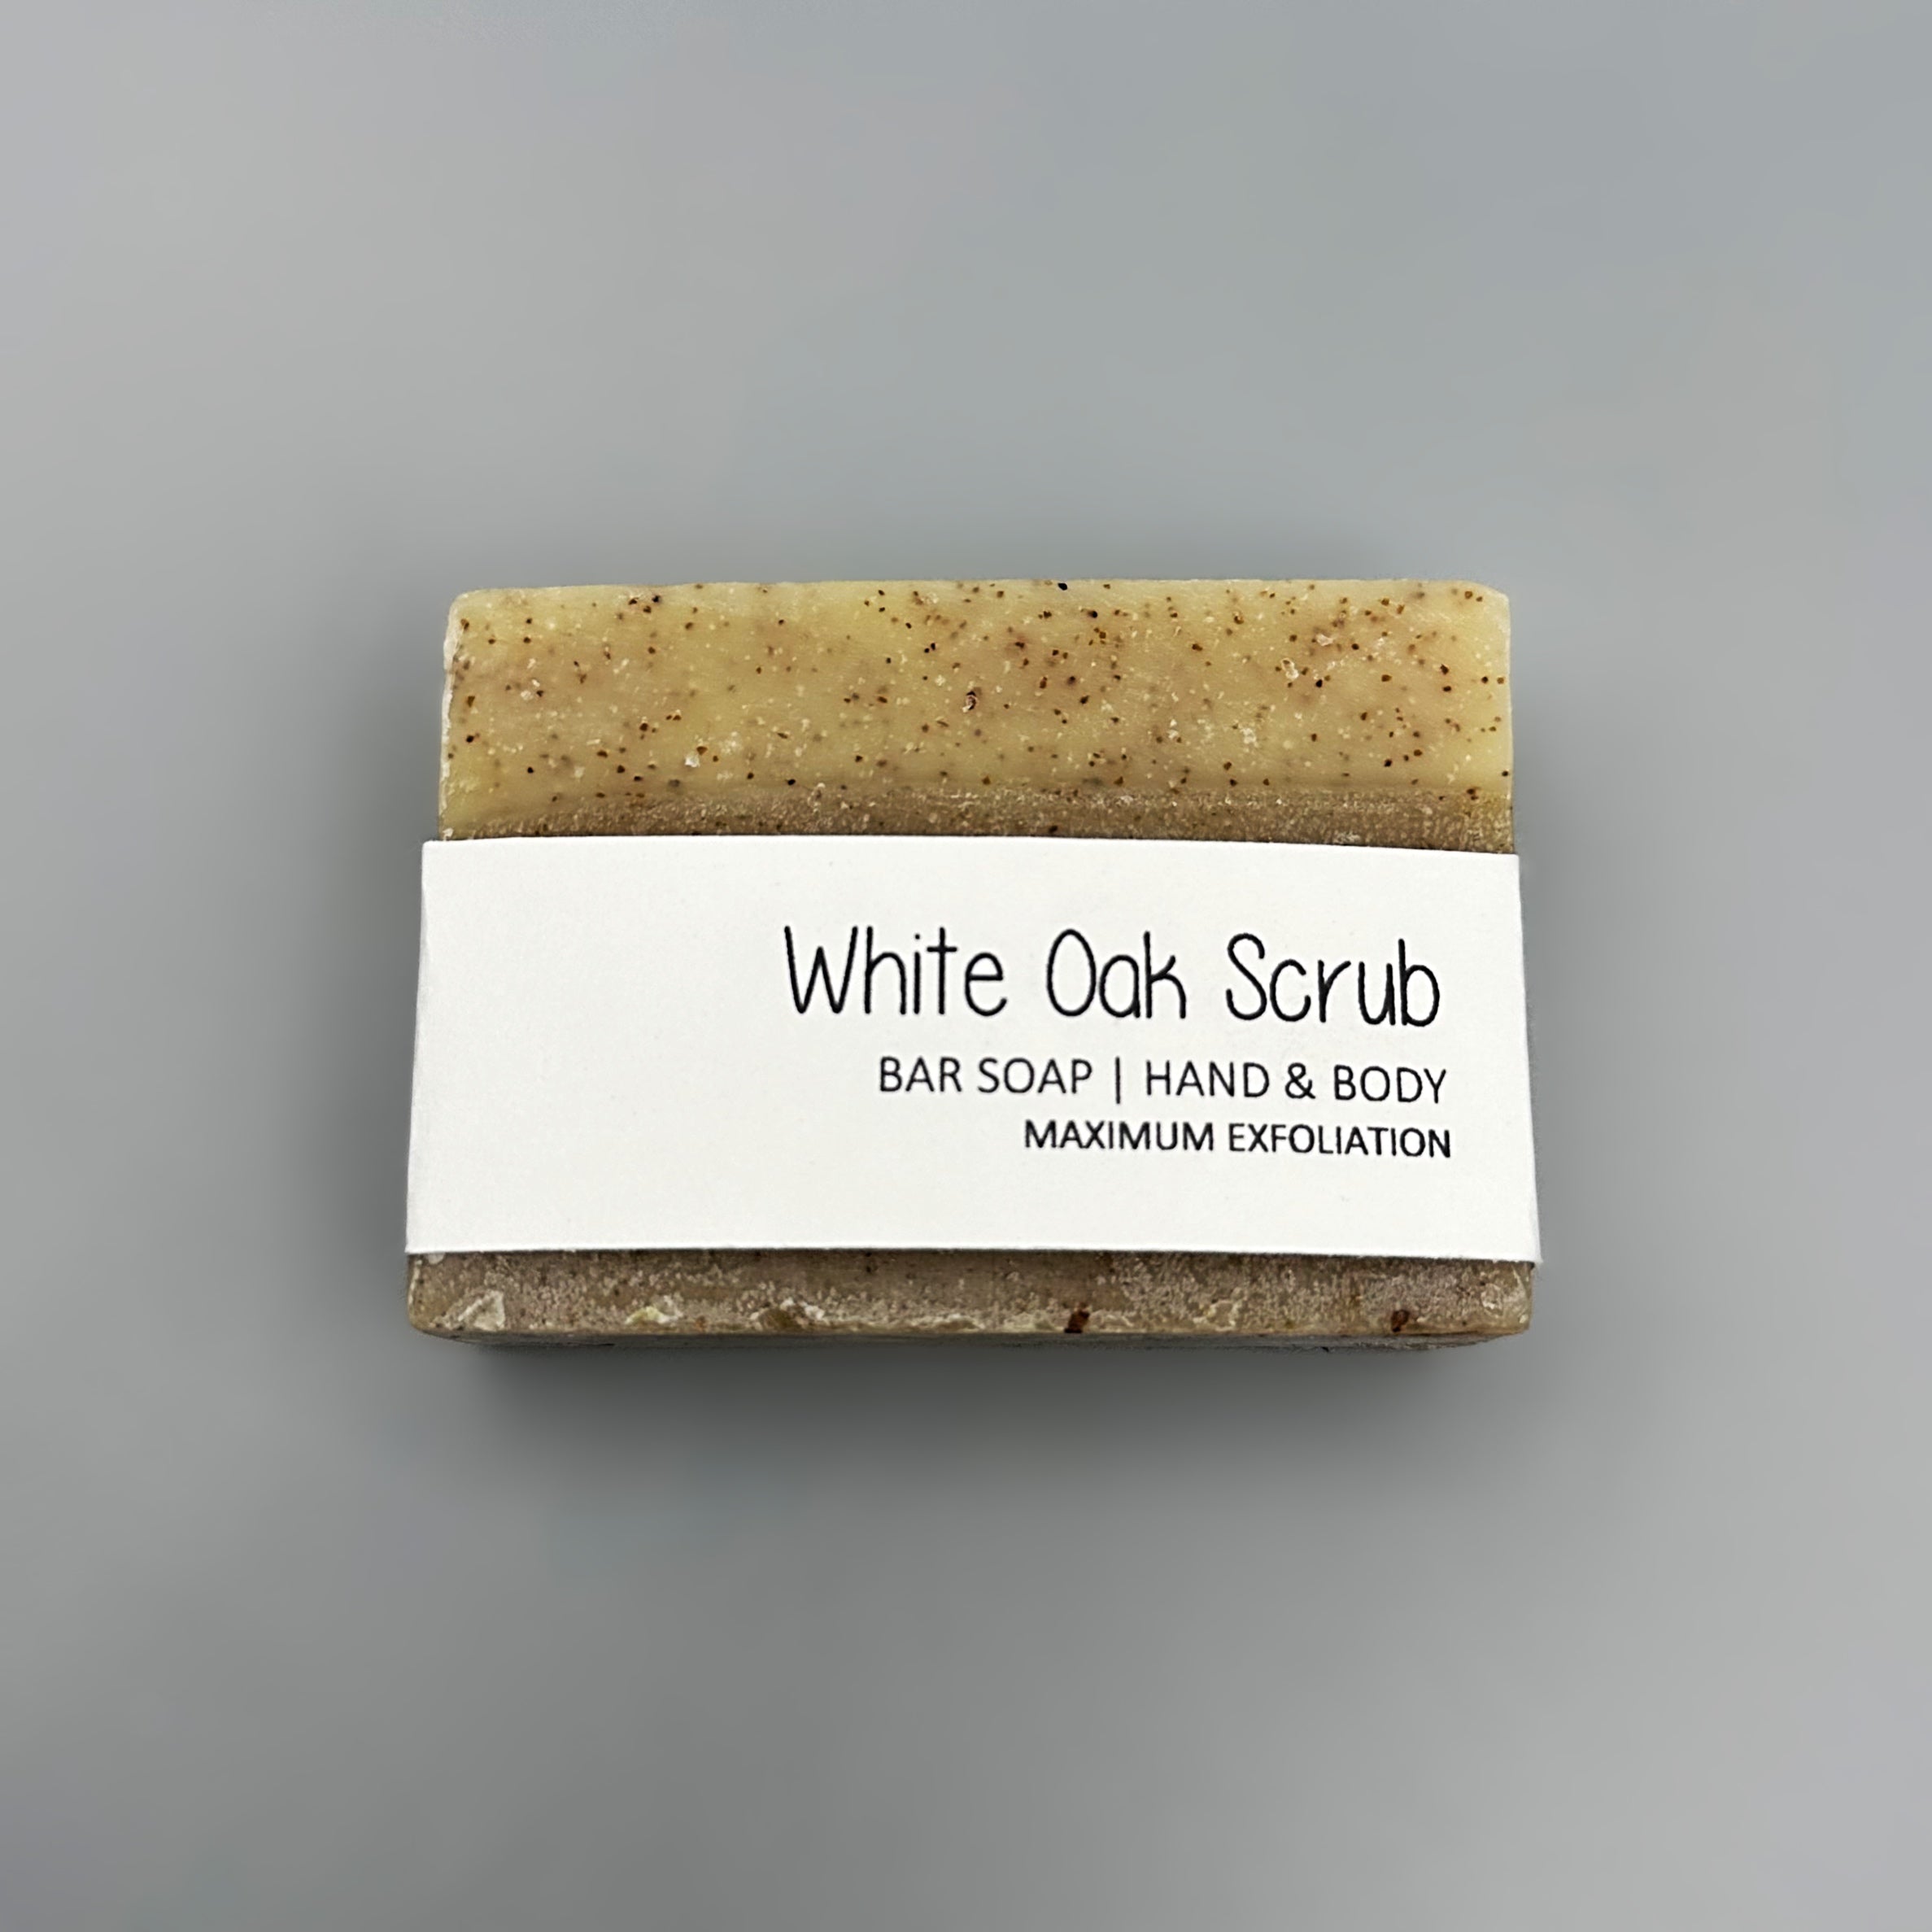 White Oak Scrub